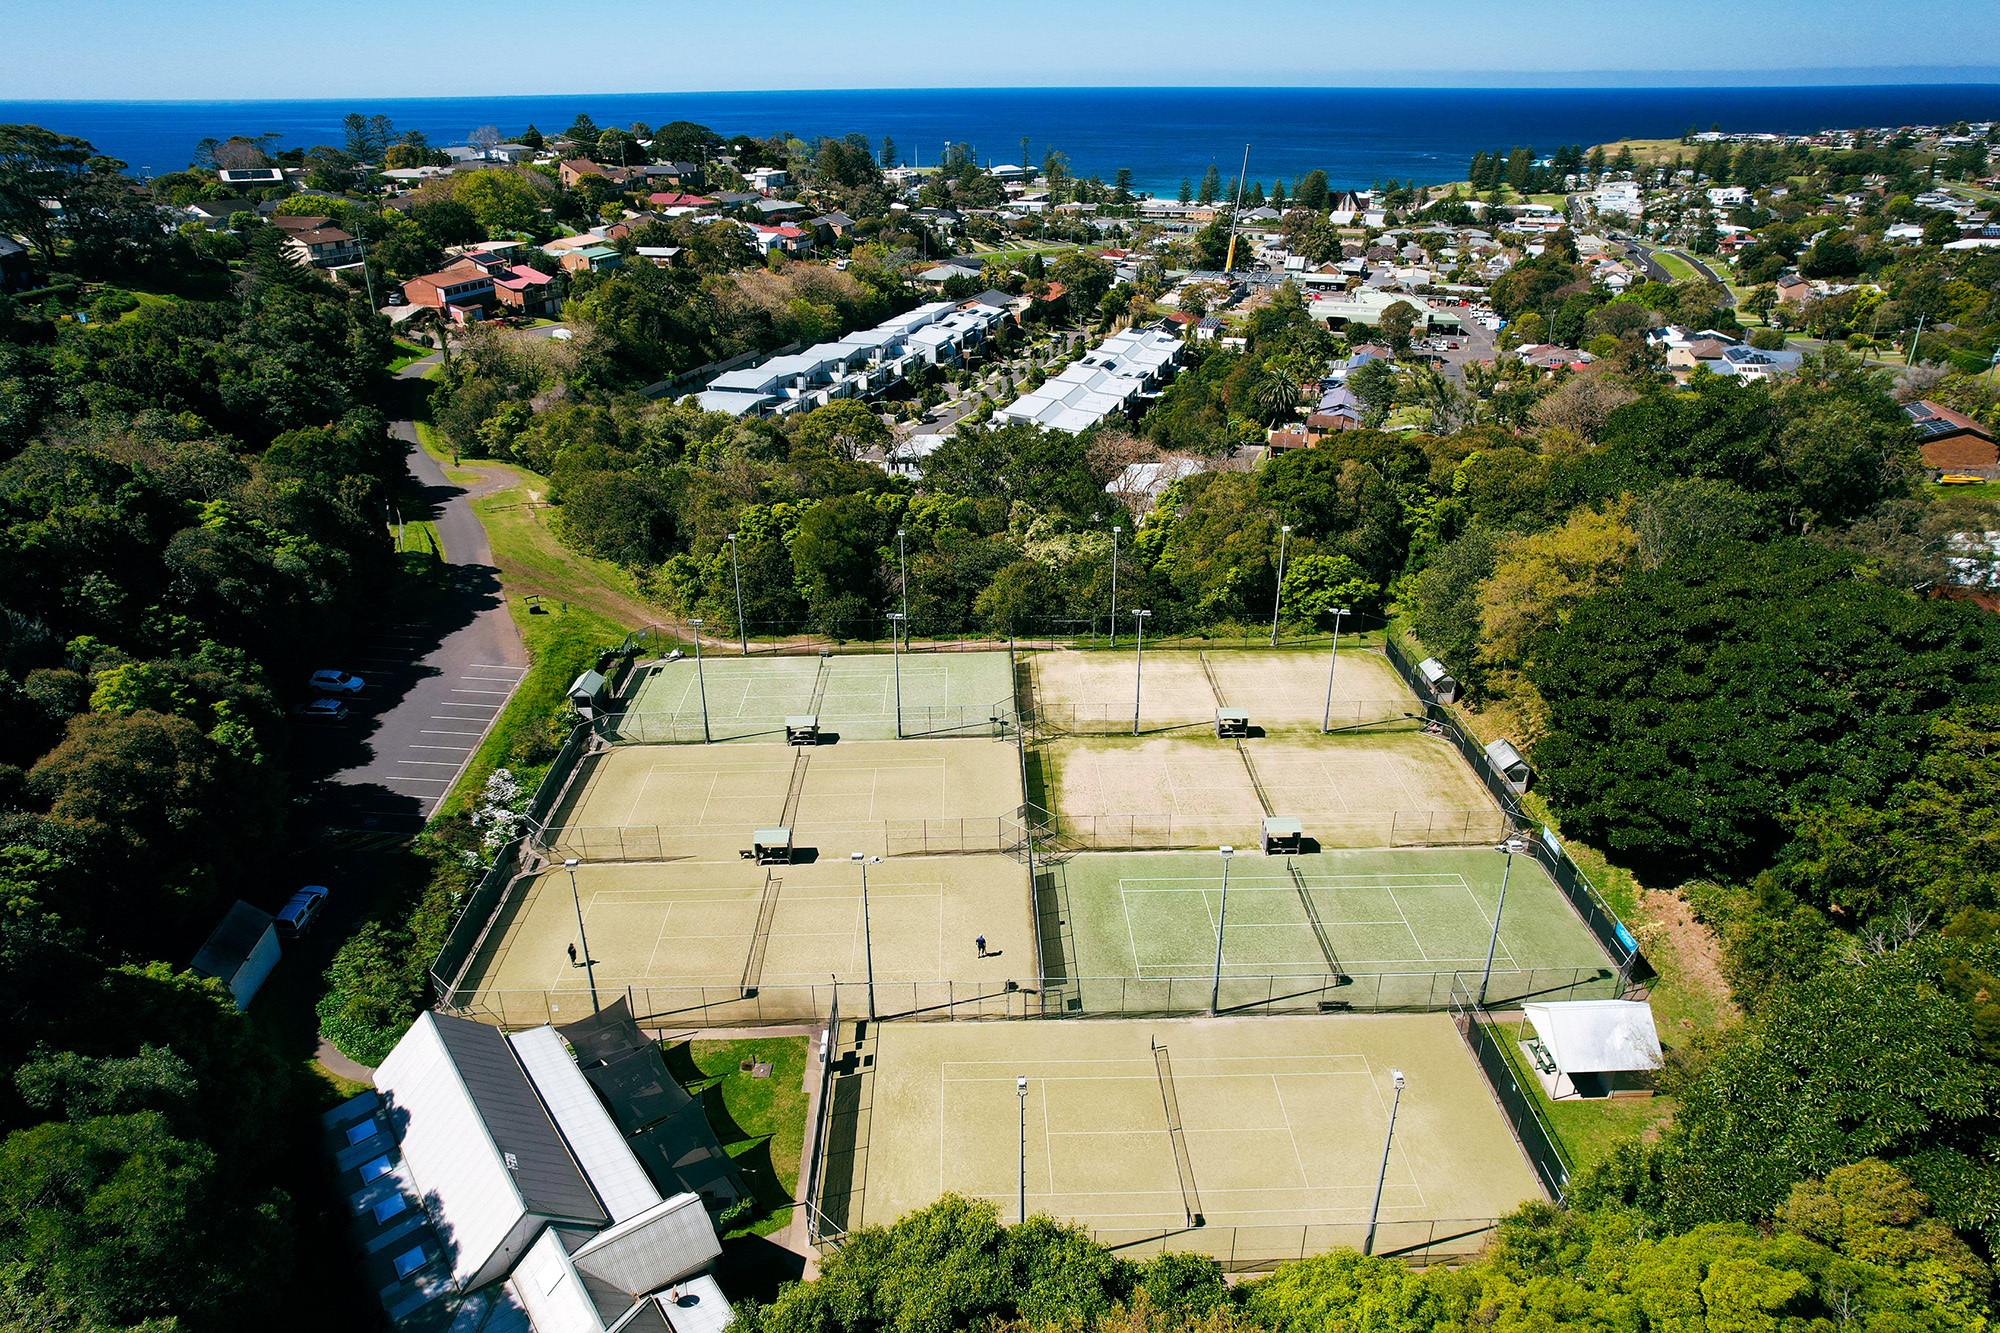 Kiama tennis club from the air